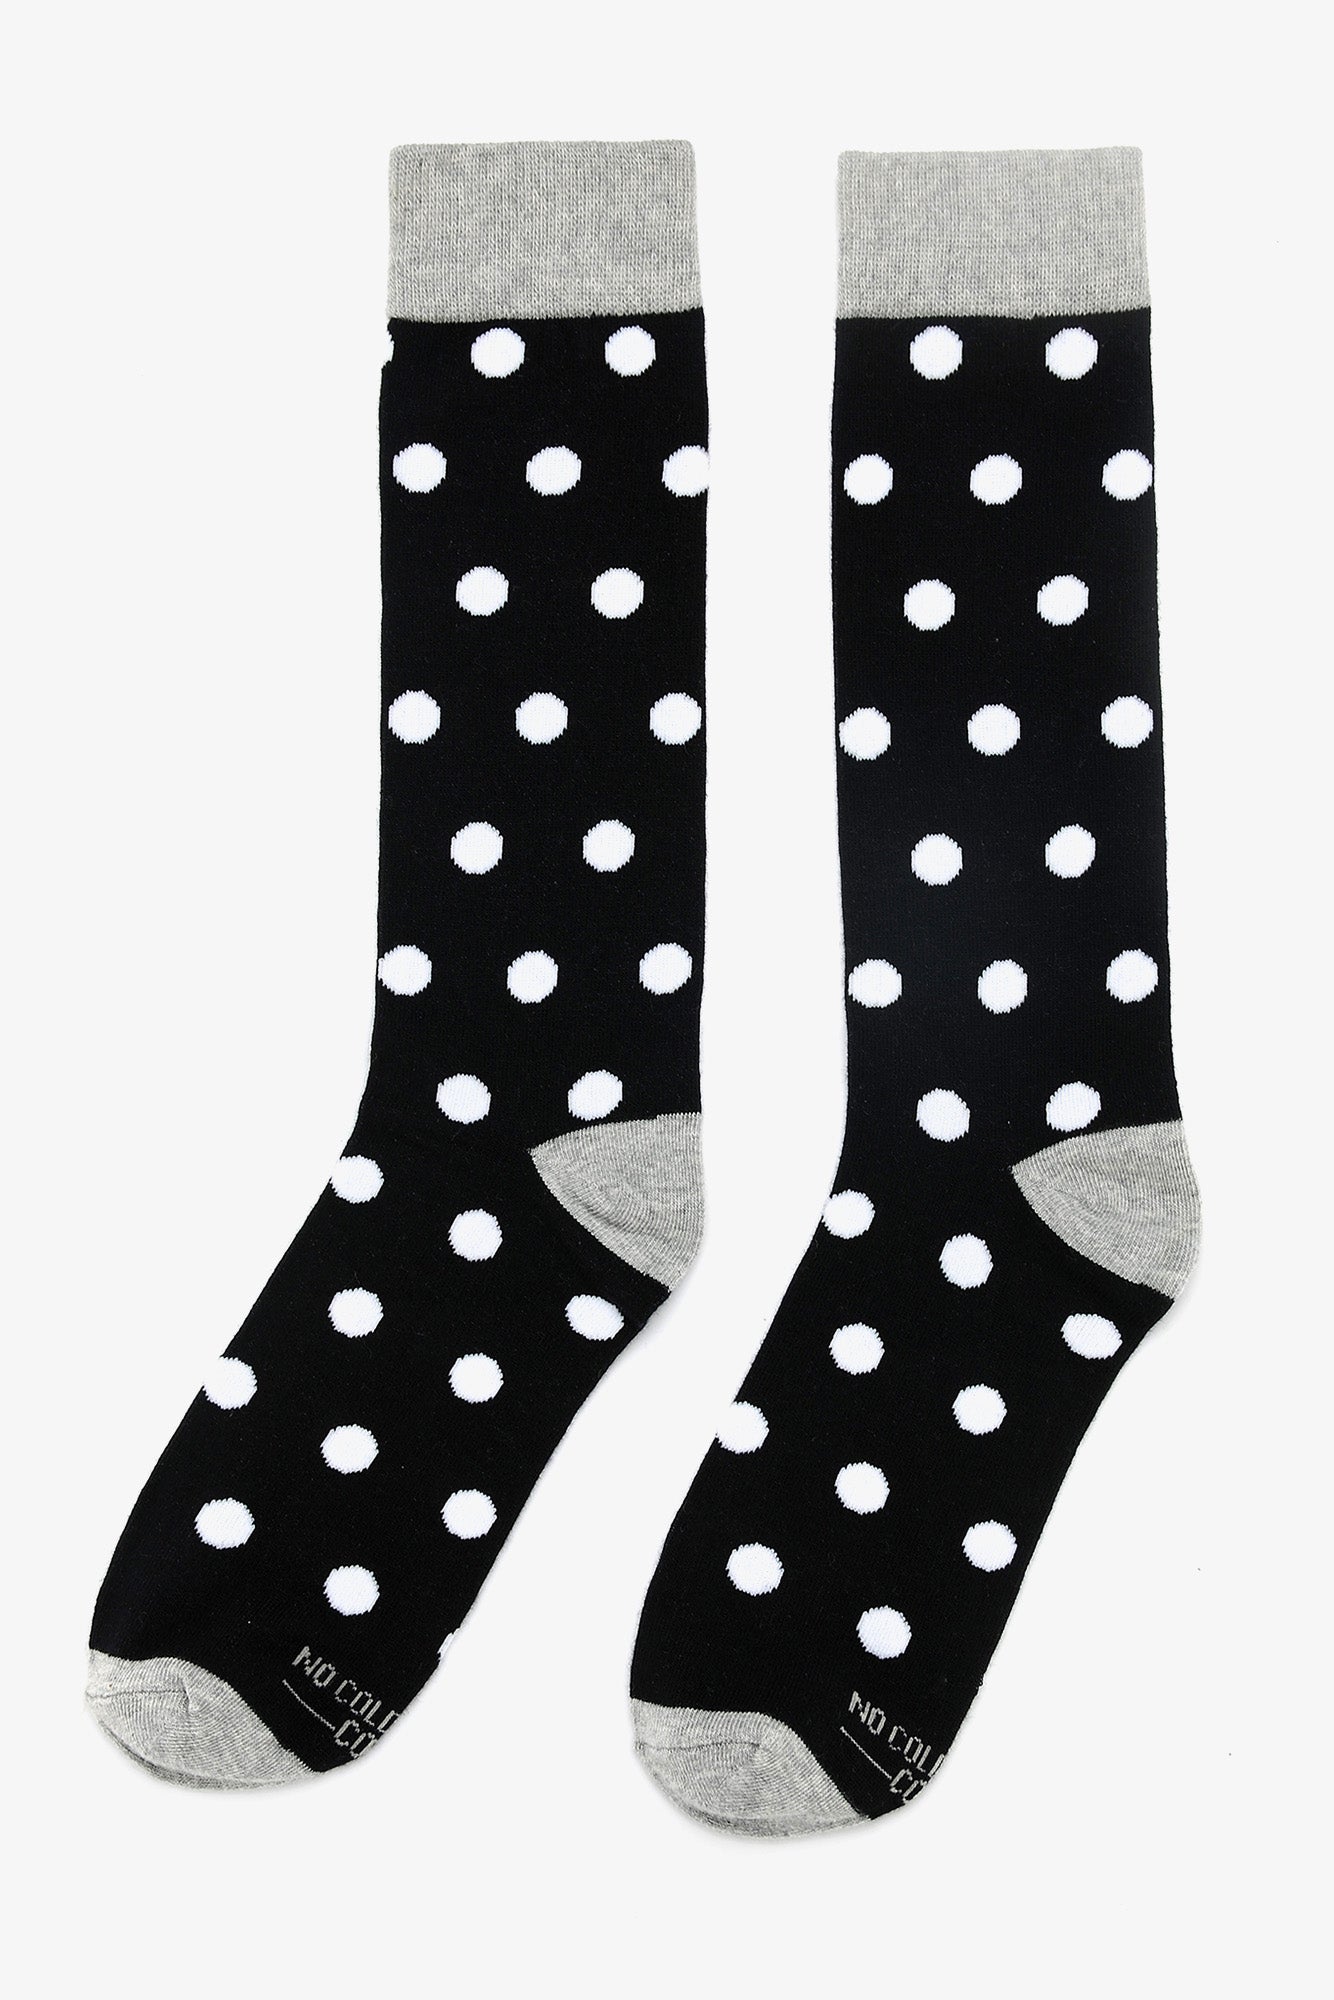 Polka Dot Groomsmen Socks By No Cold Feet - Black